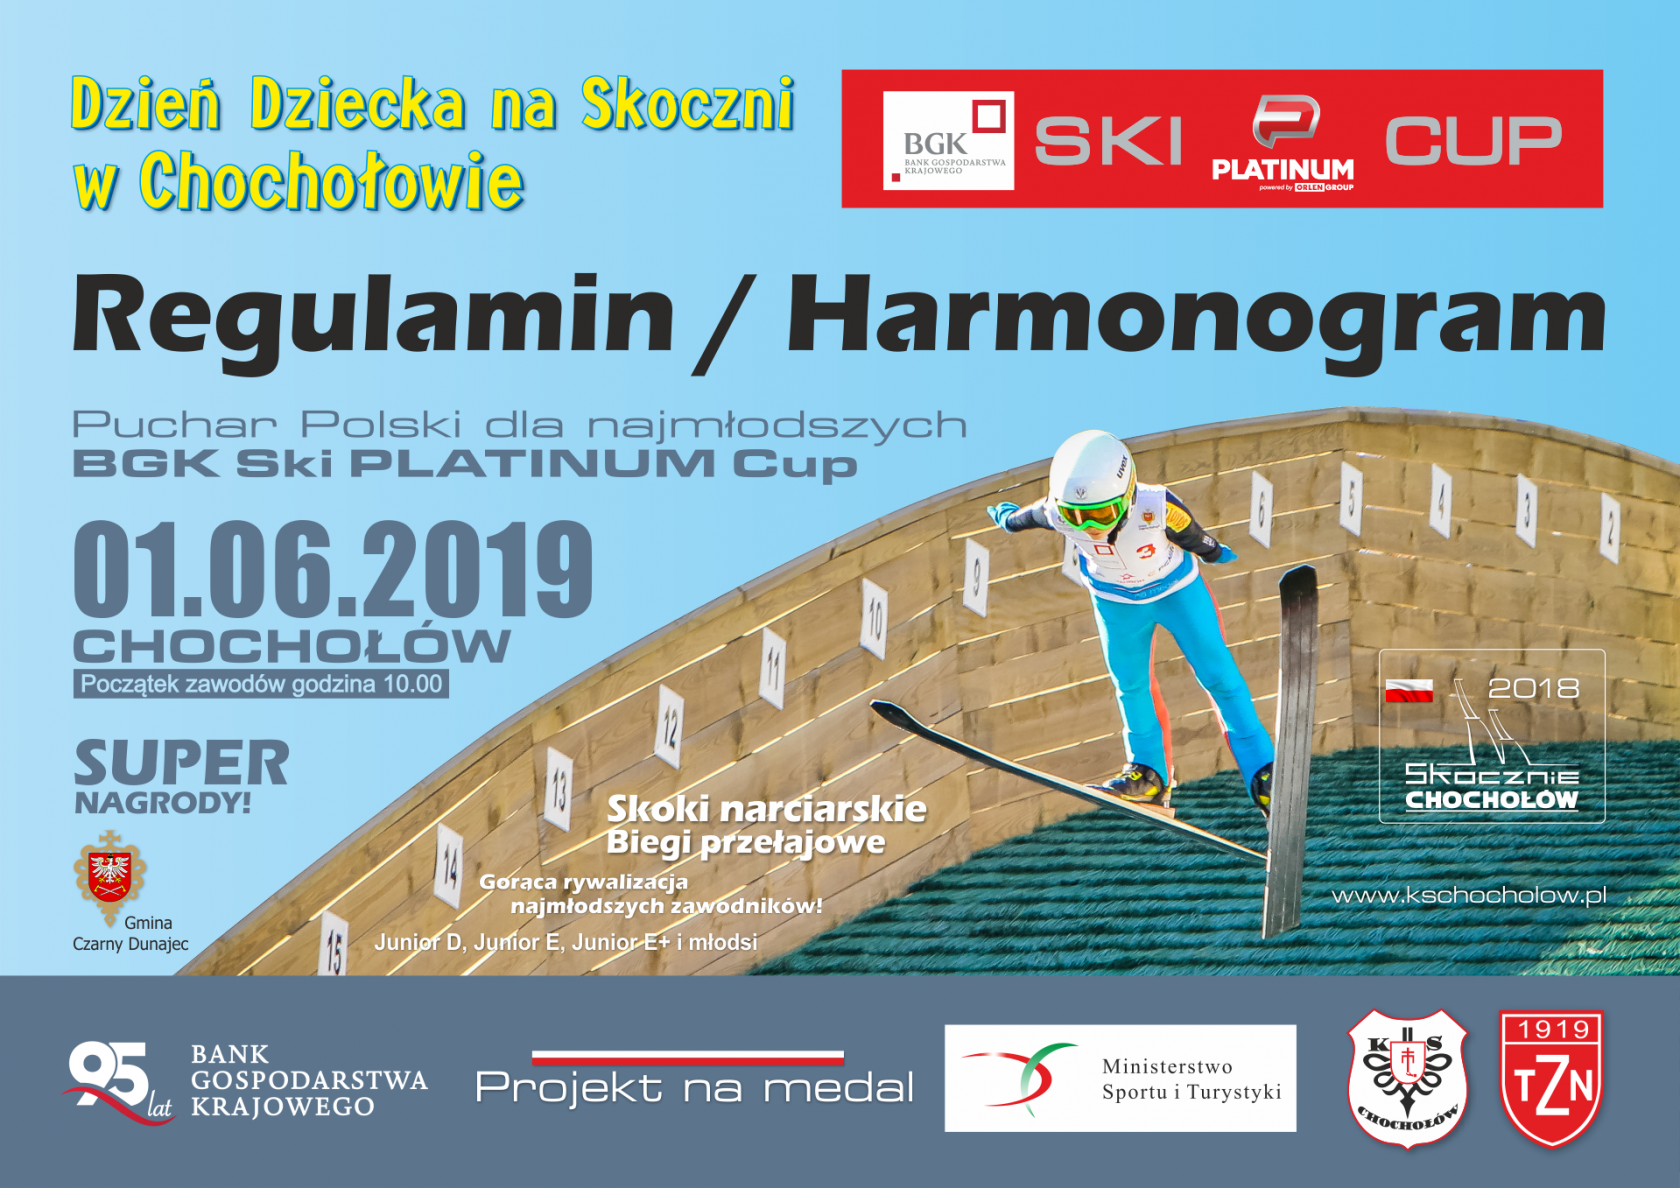 BGK Ski PLATINUM Cup - Komunikat: Regulamin / Harmonogram